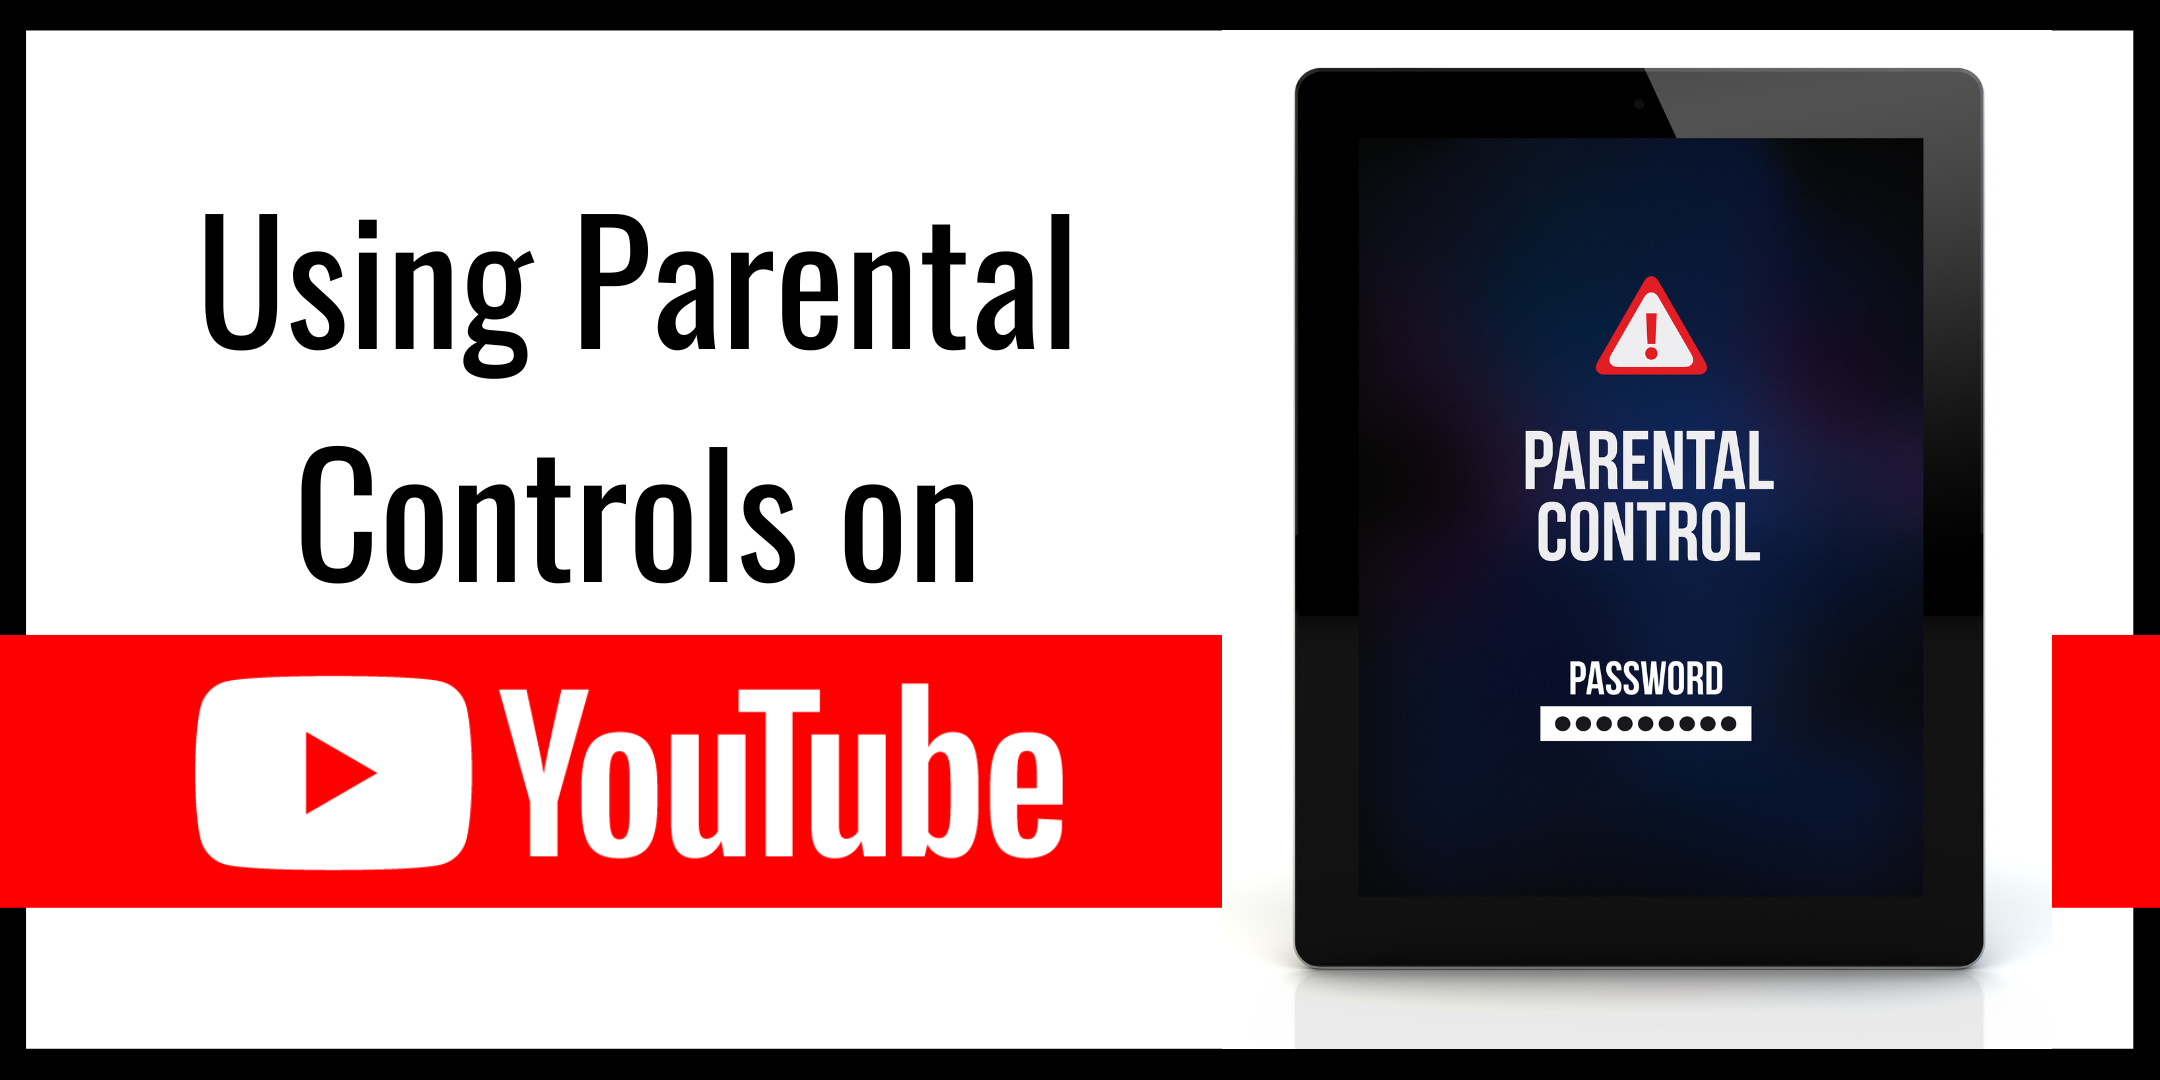 image of "Using Parental Controls on YouTube"